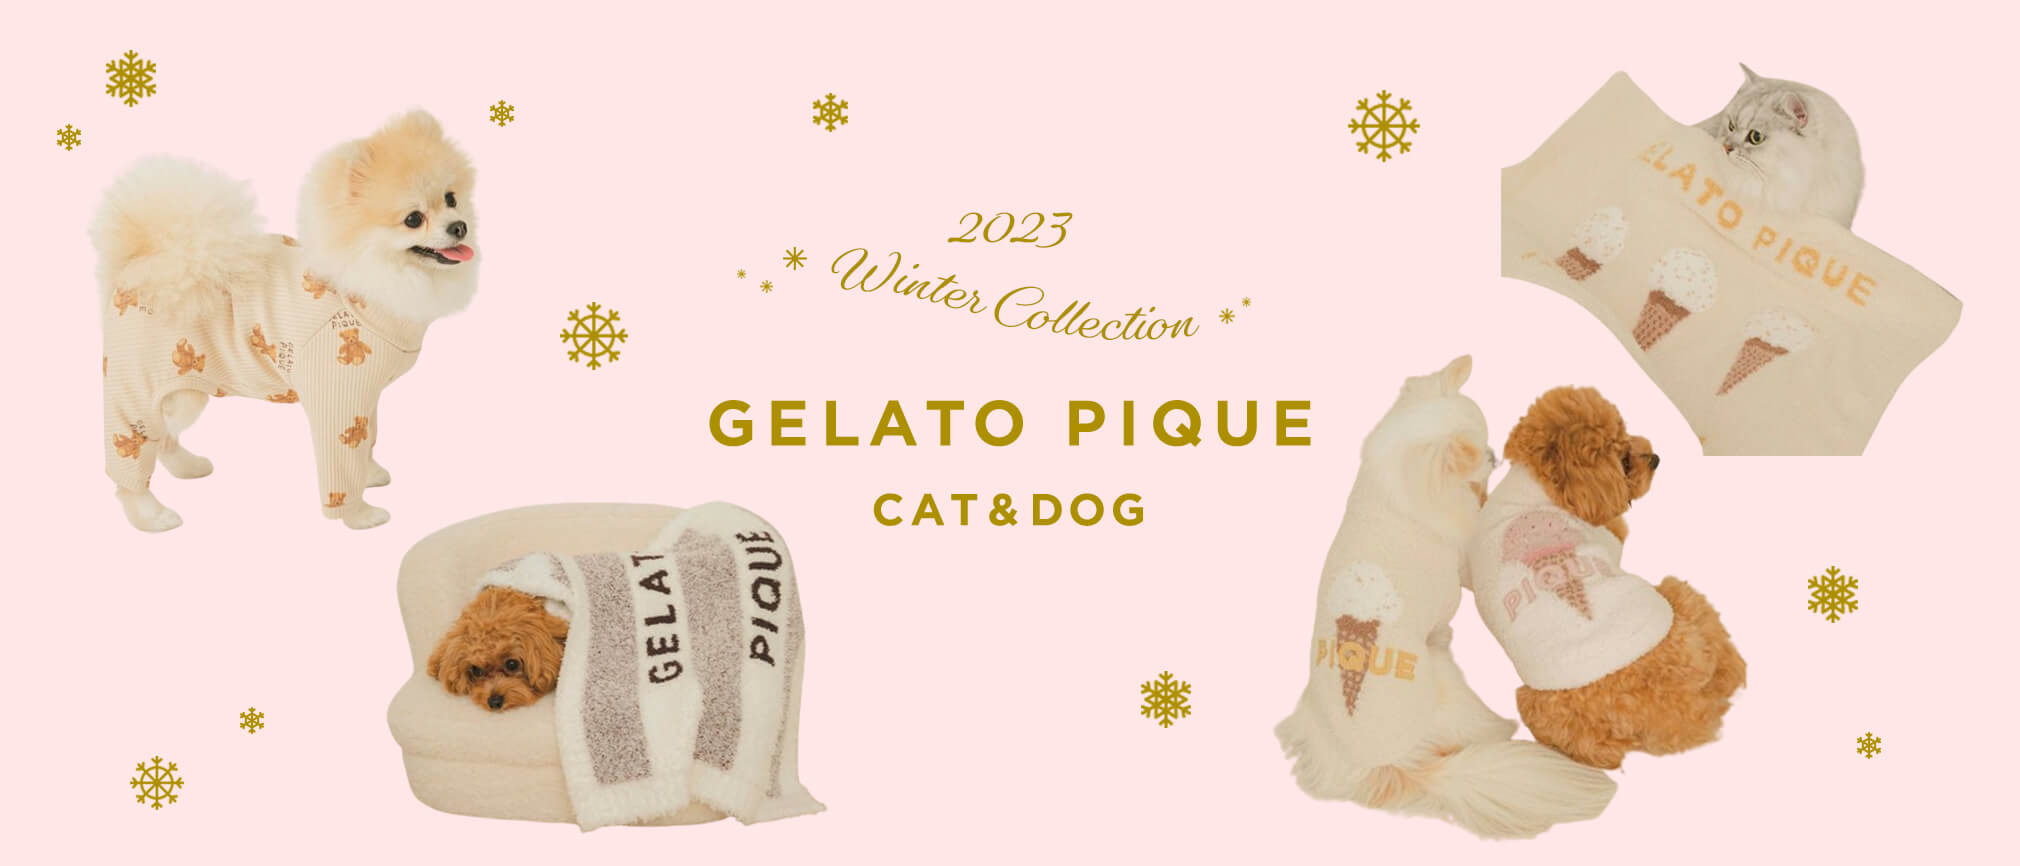 「gelato pique」Winter Holiday Collection